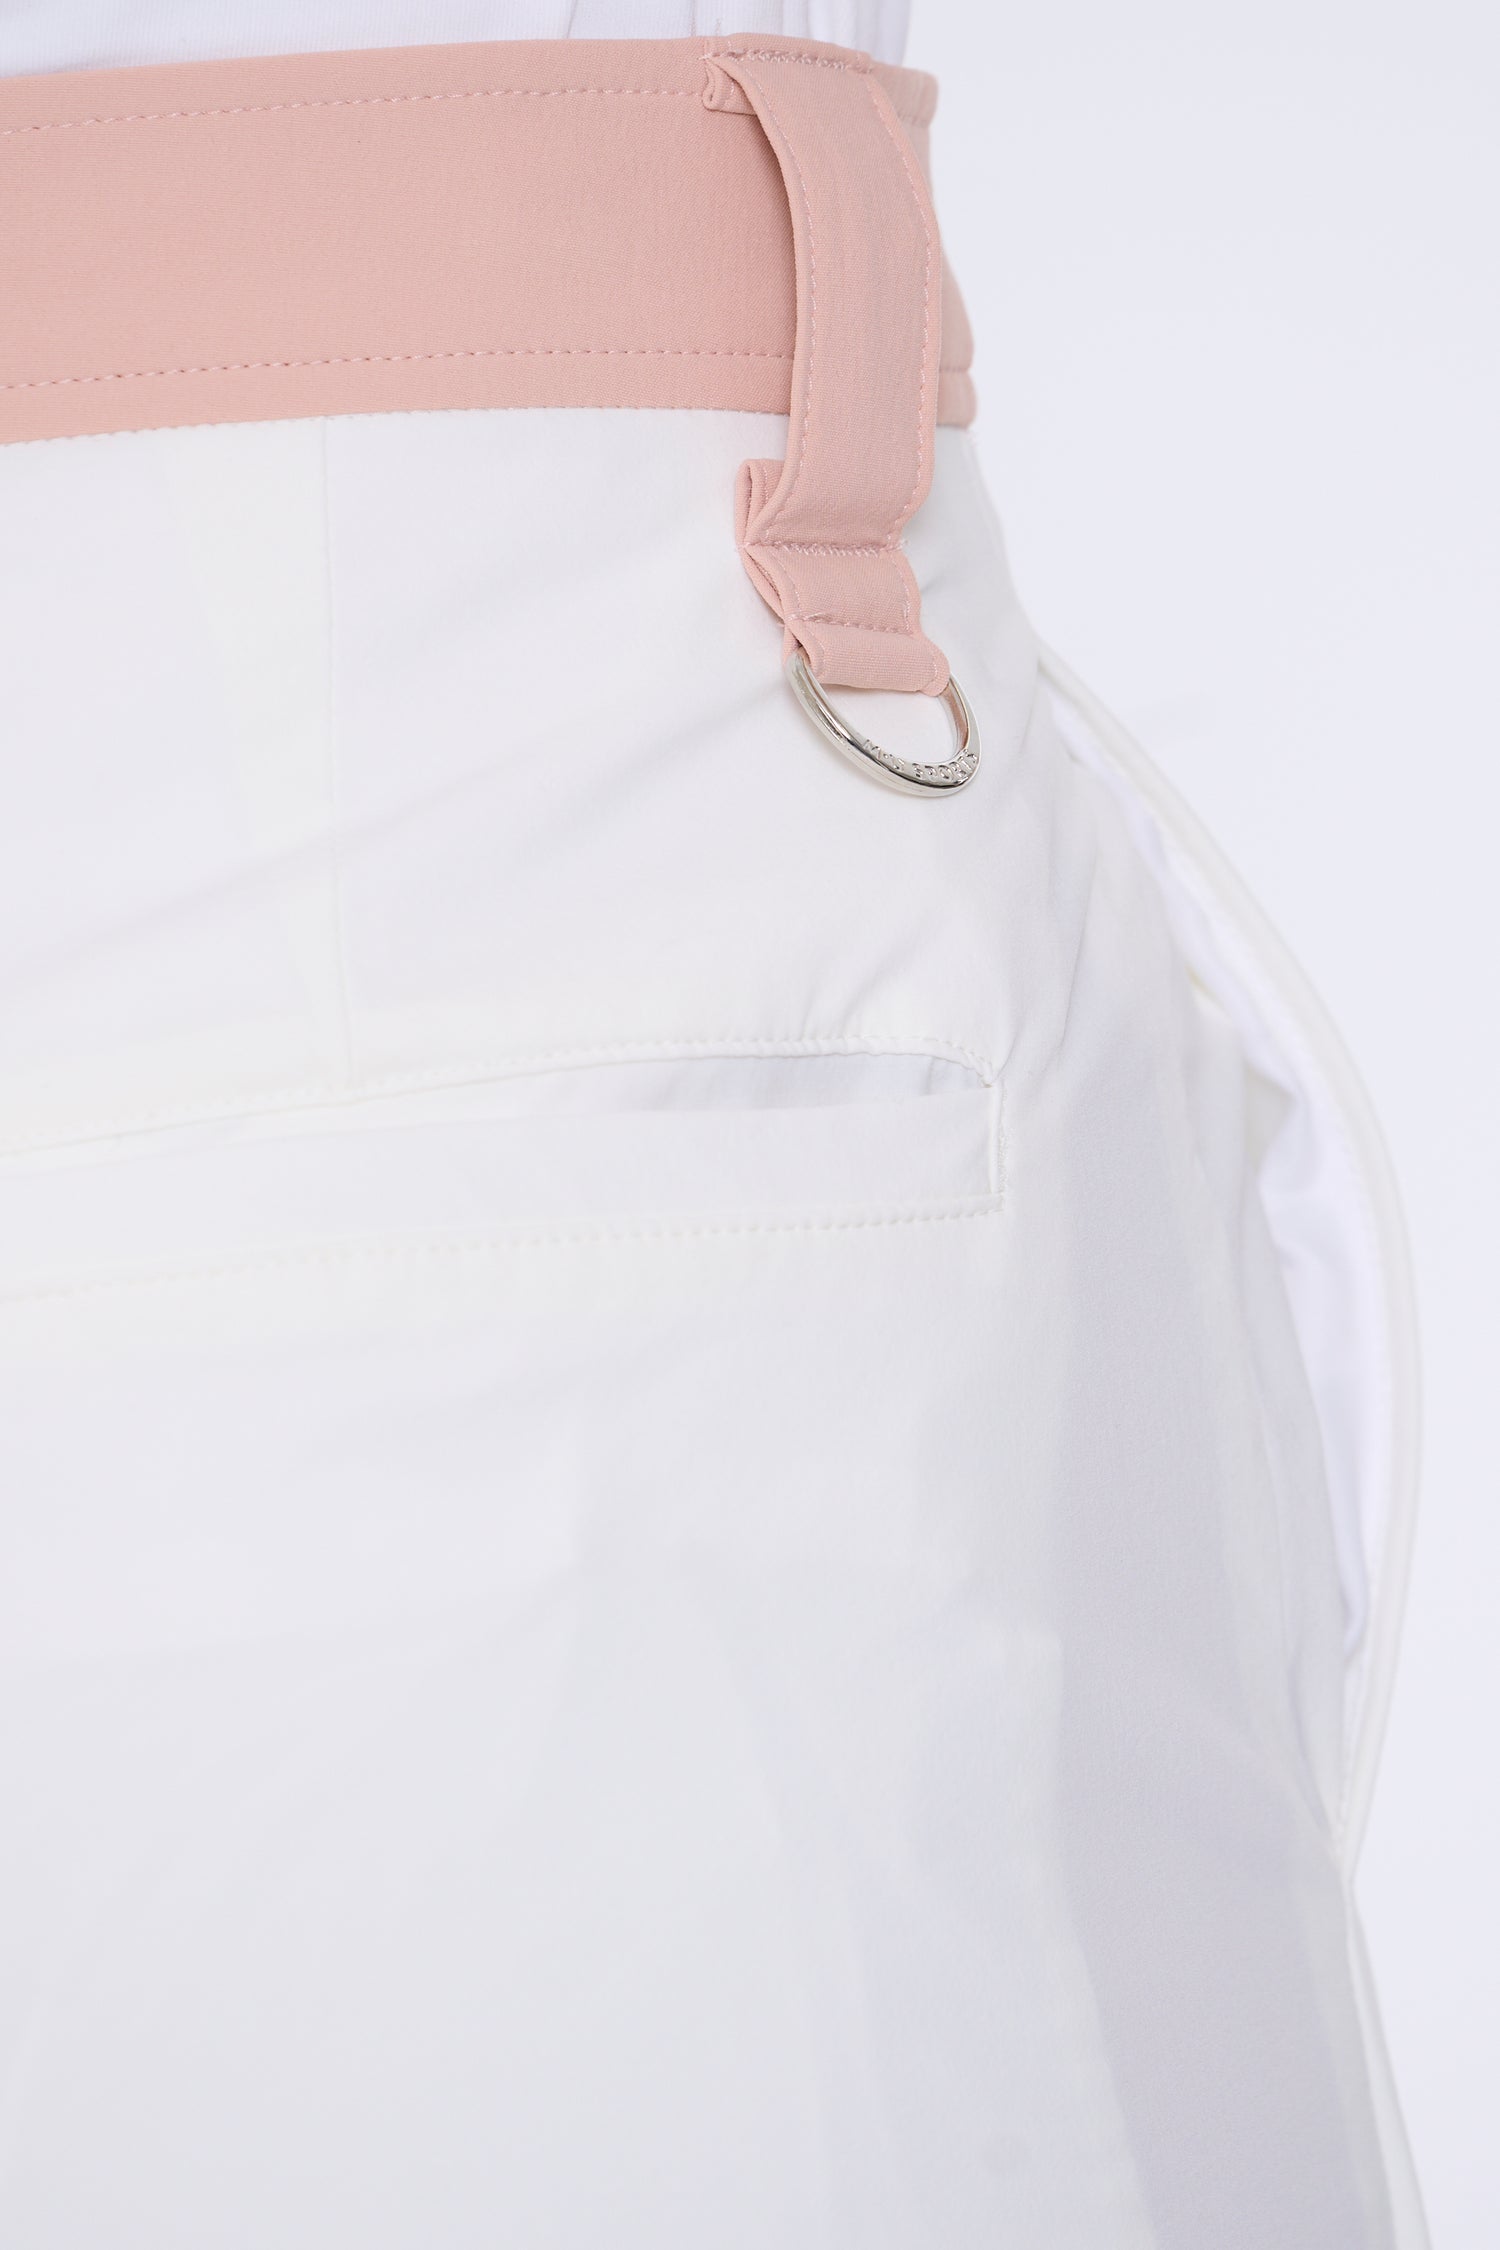 Front wrap shorts (801H2556)